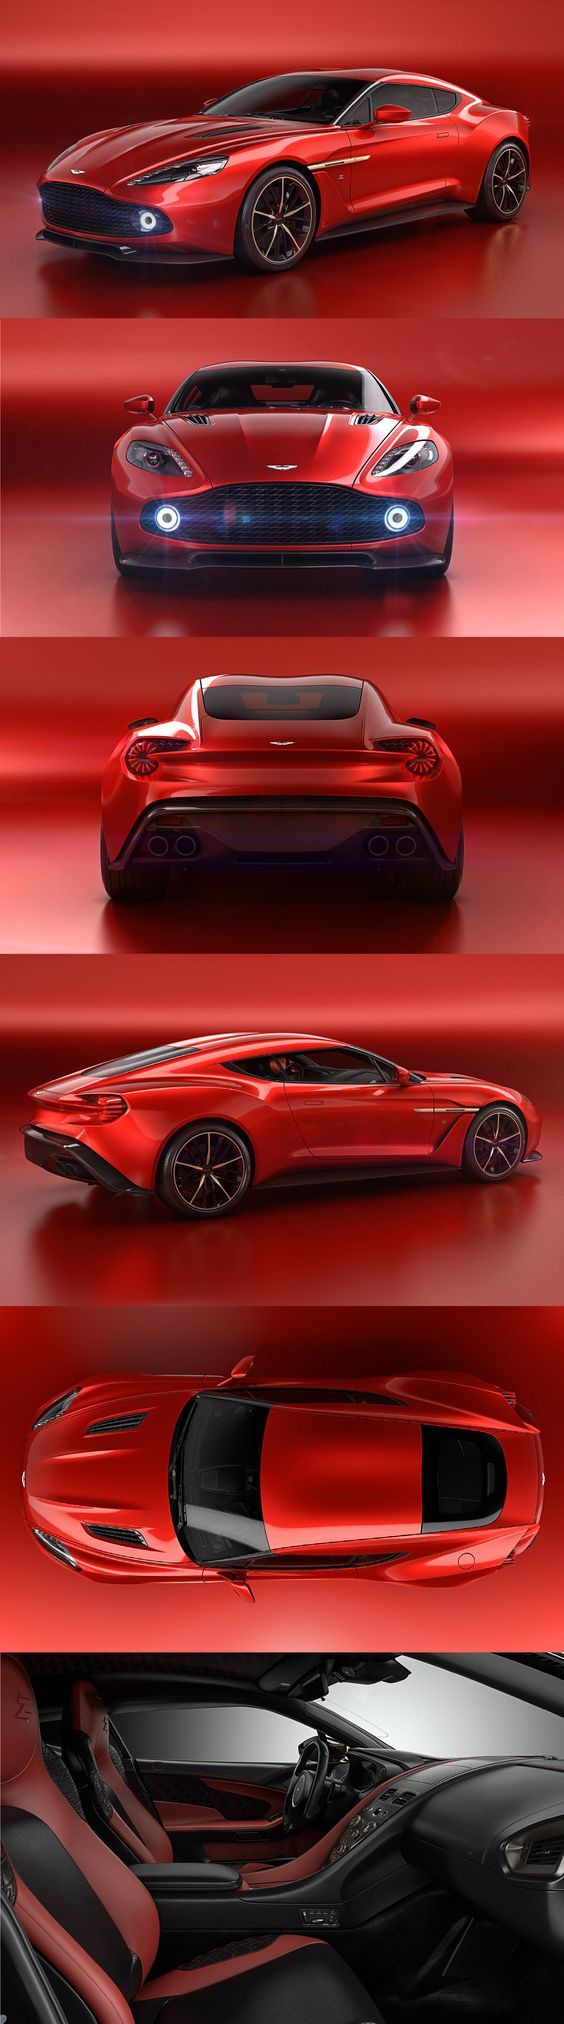 www.Newcarreleasedates.com So Nice Must See : Aston Martin Vanquish Zagato - #Aston #Martin #Vanquish #Zagato